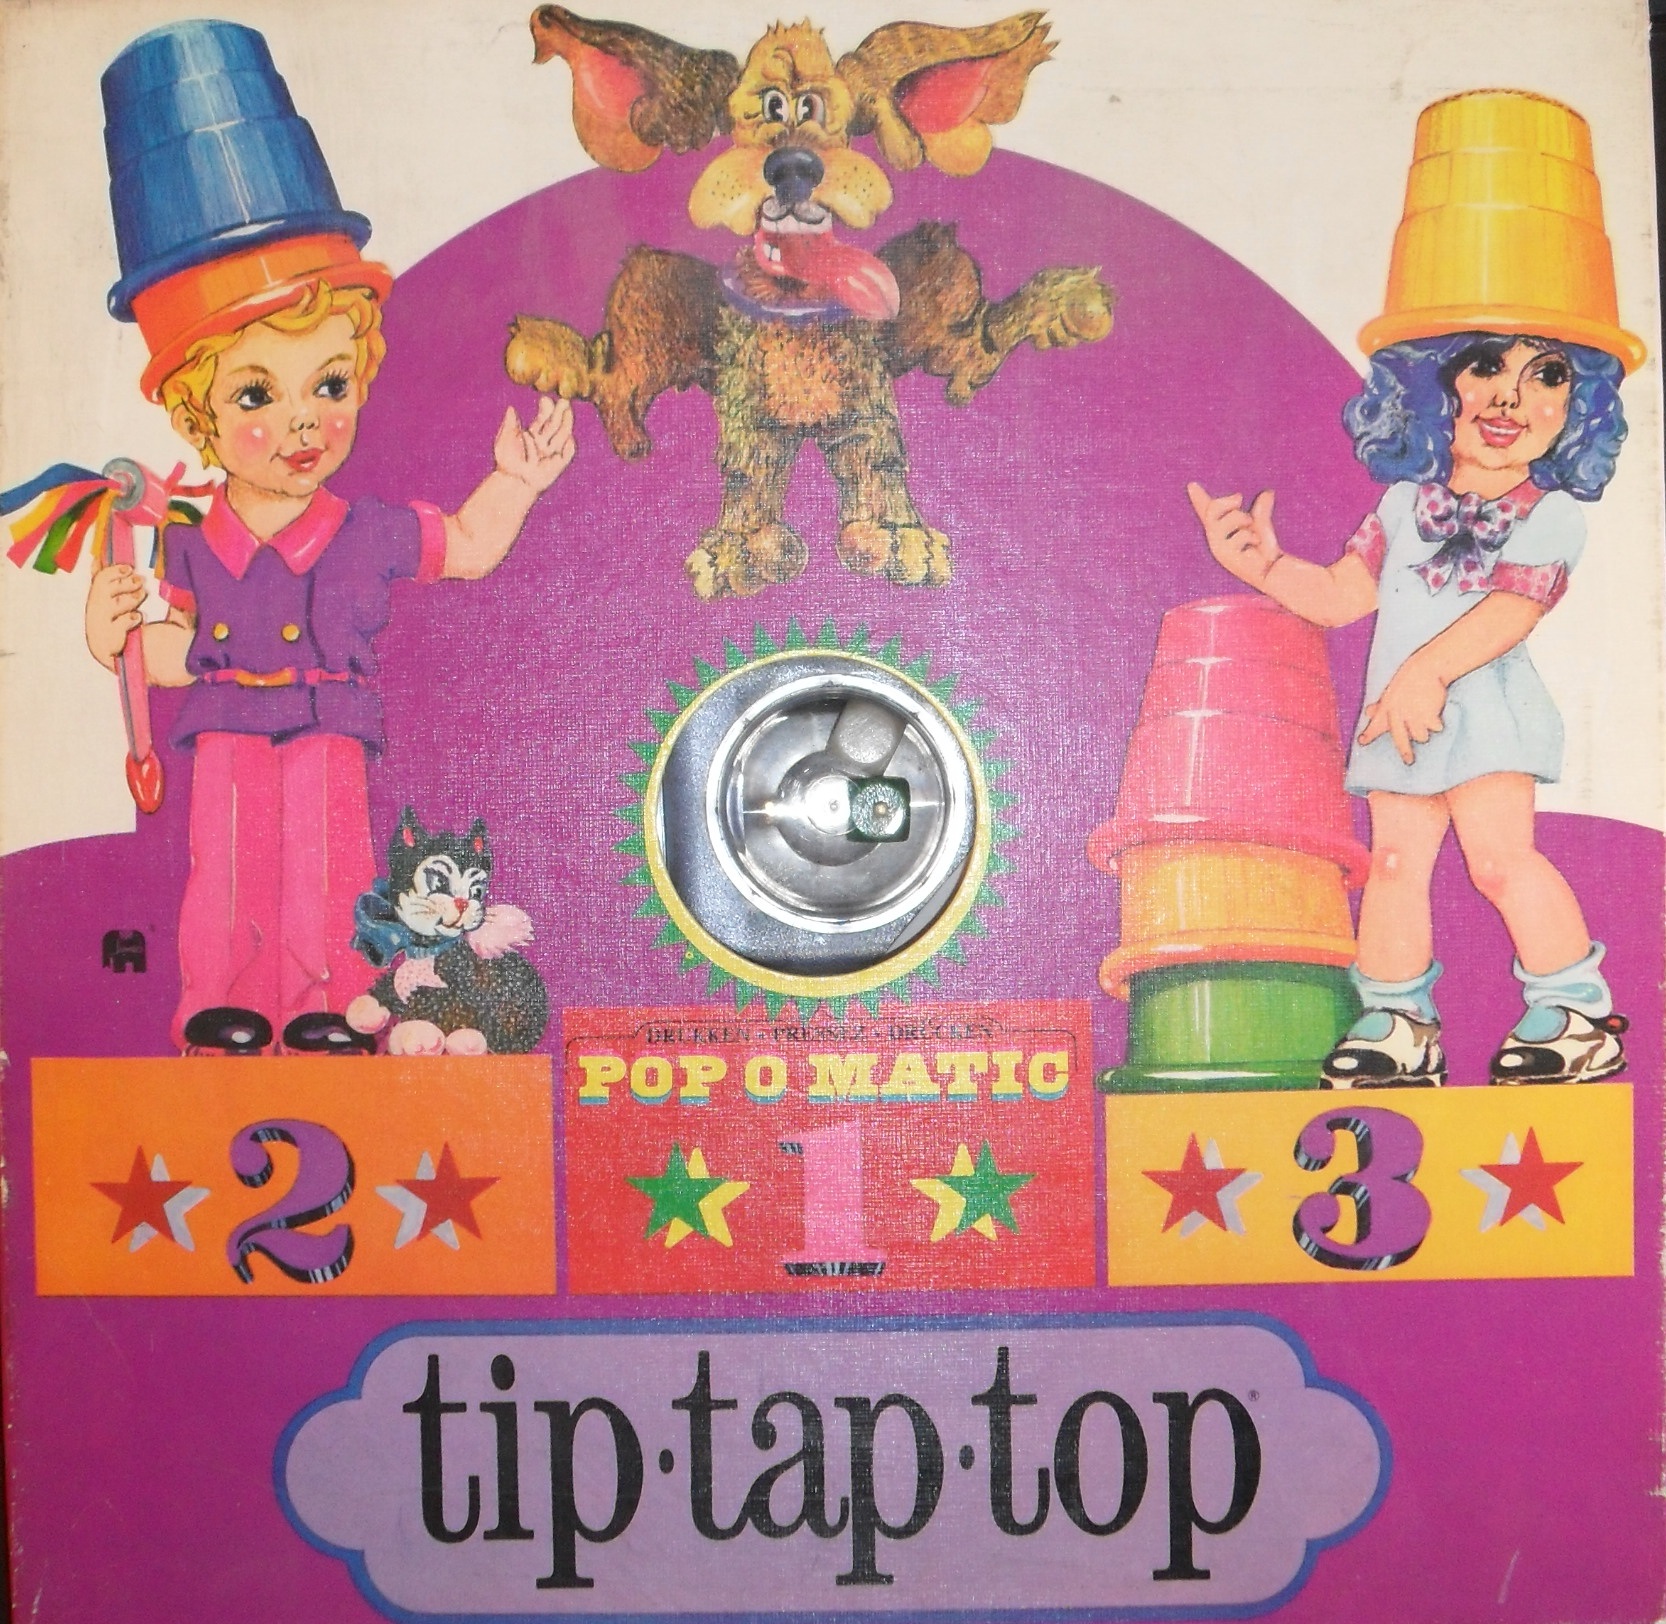 Tip tap top